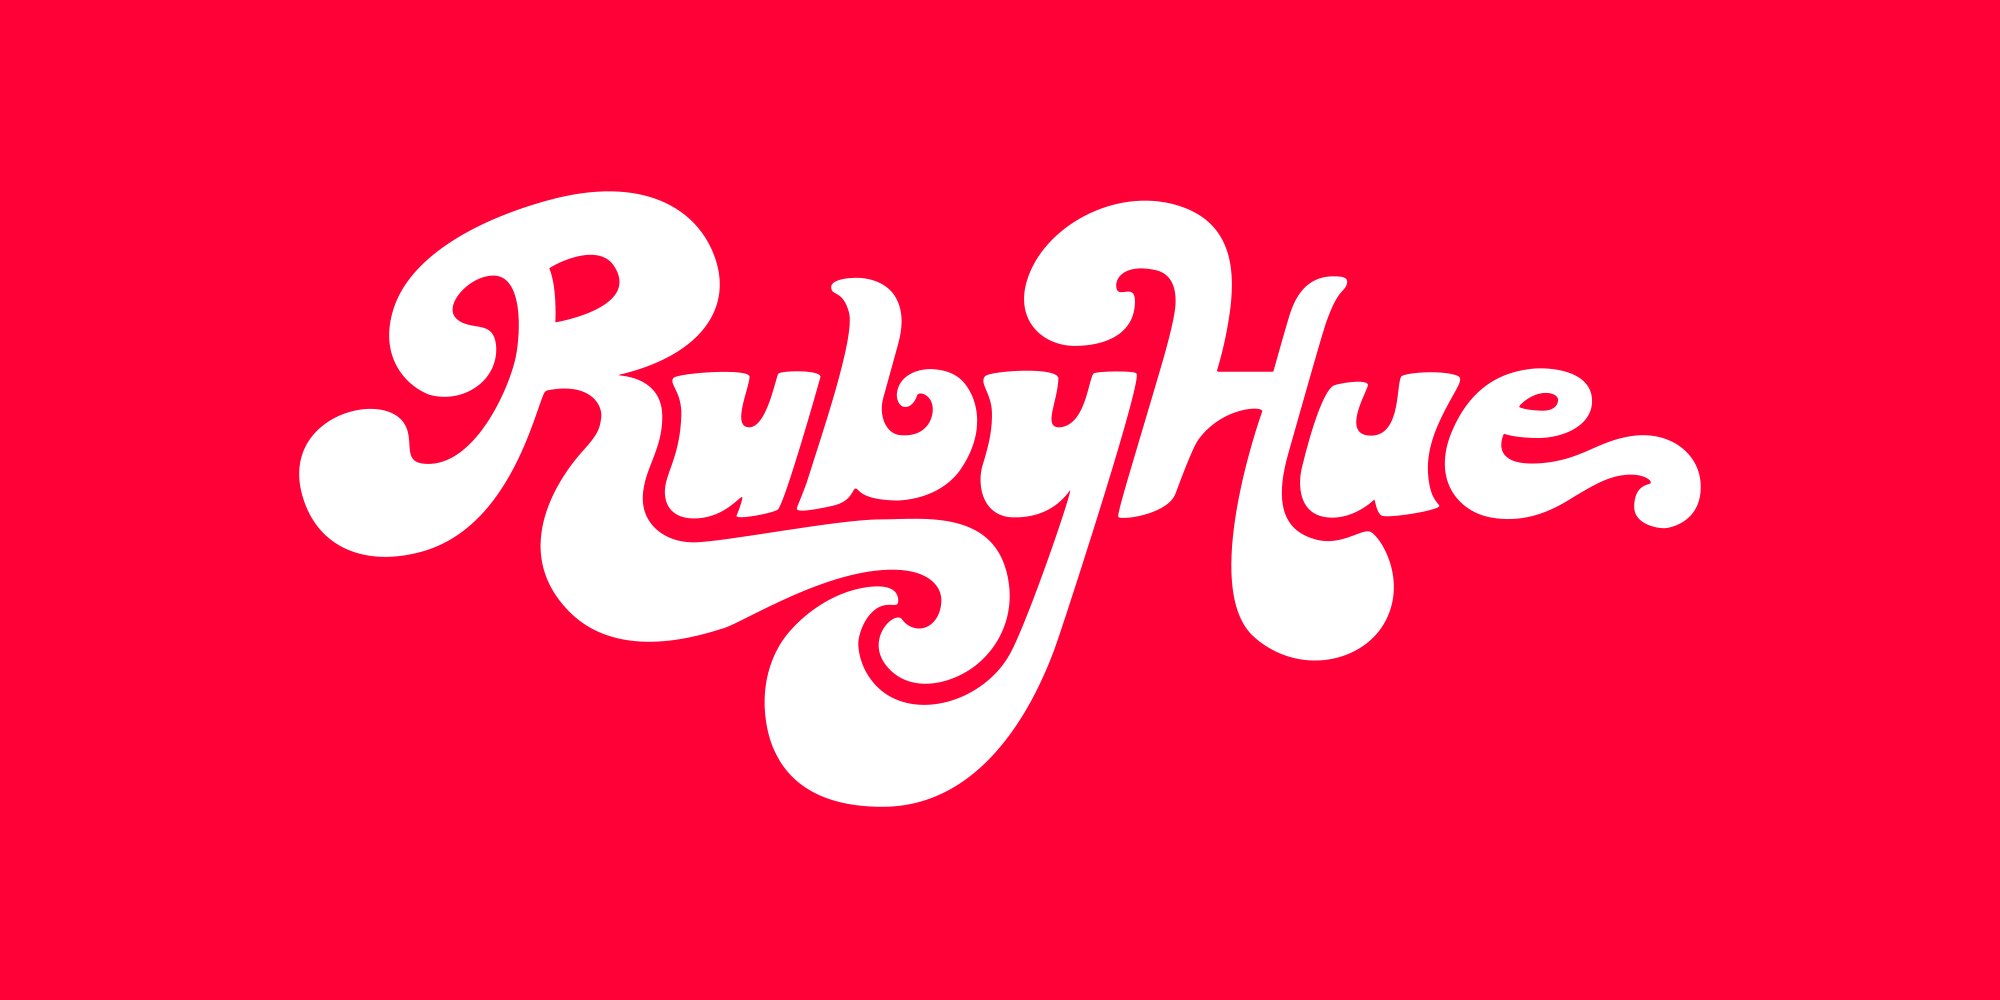 RubyHue_Identity01b.png